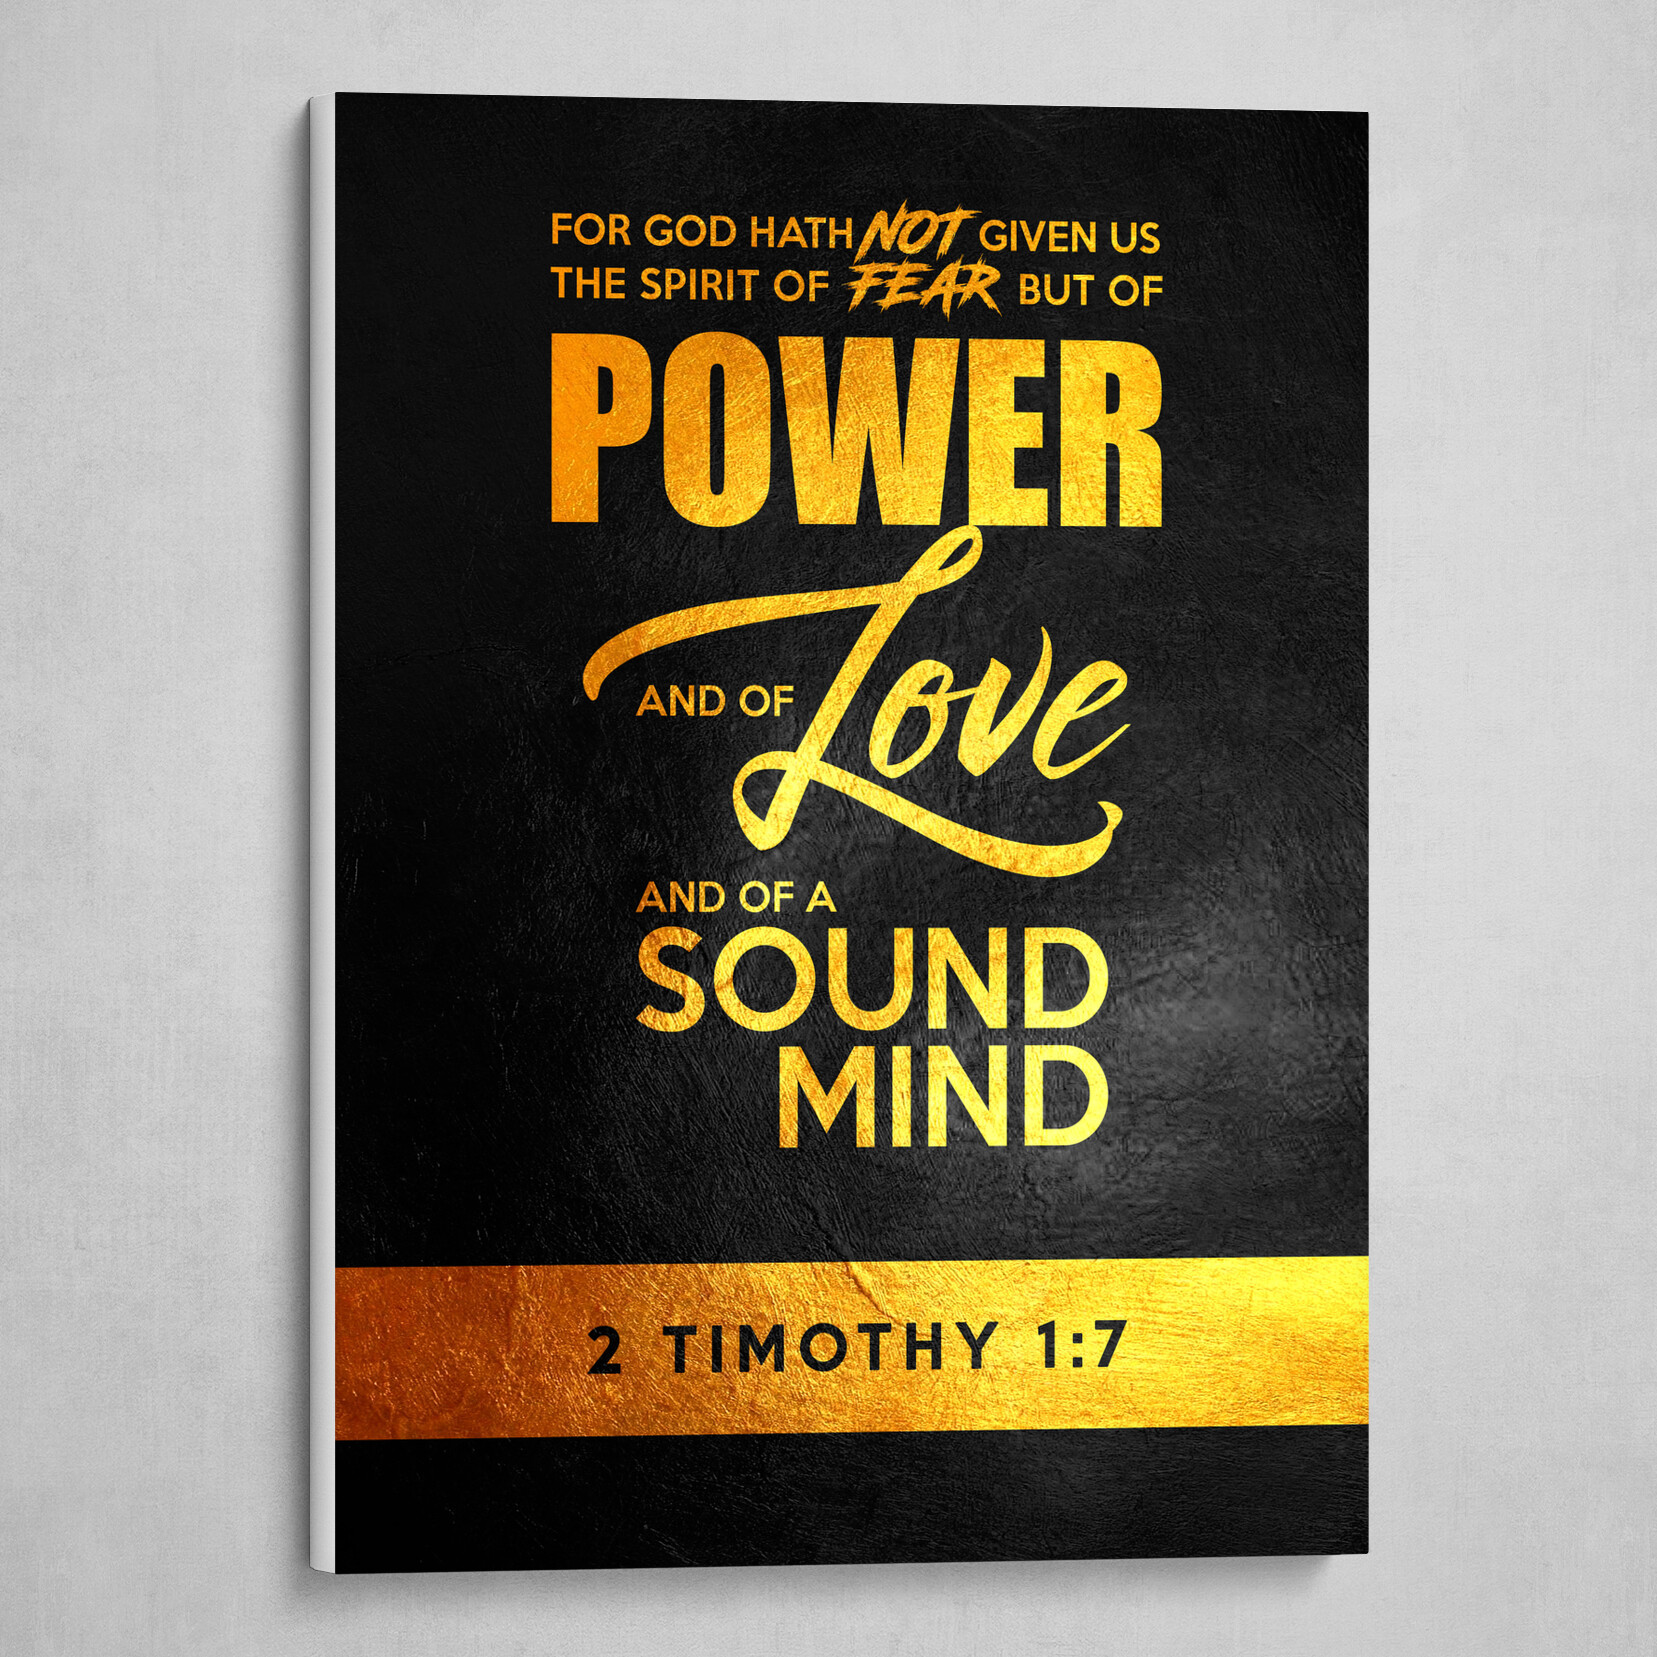 2 Timothy 1:7 Bible Verse Text Art